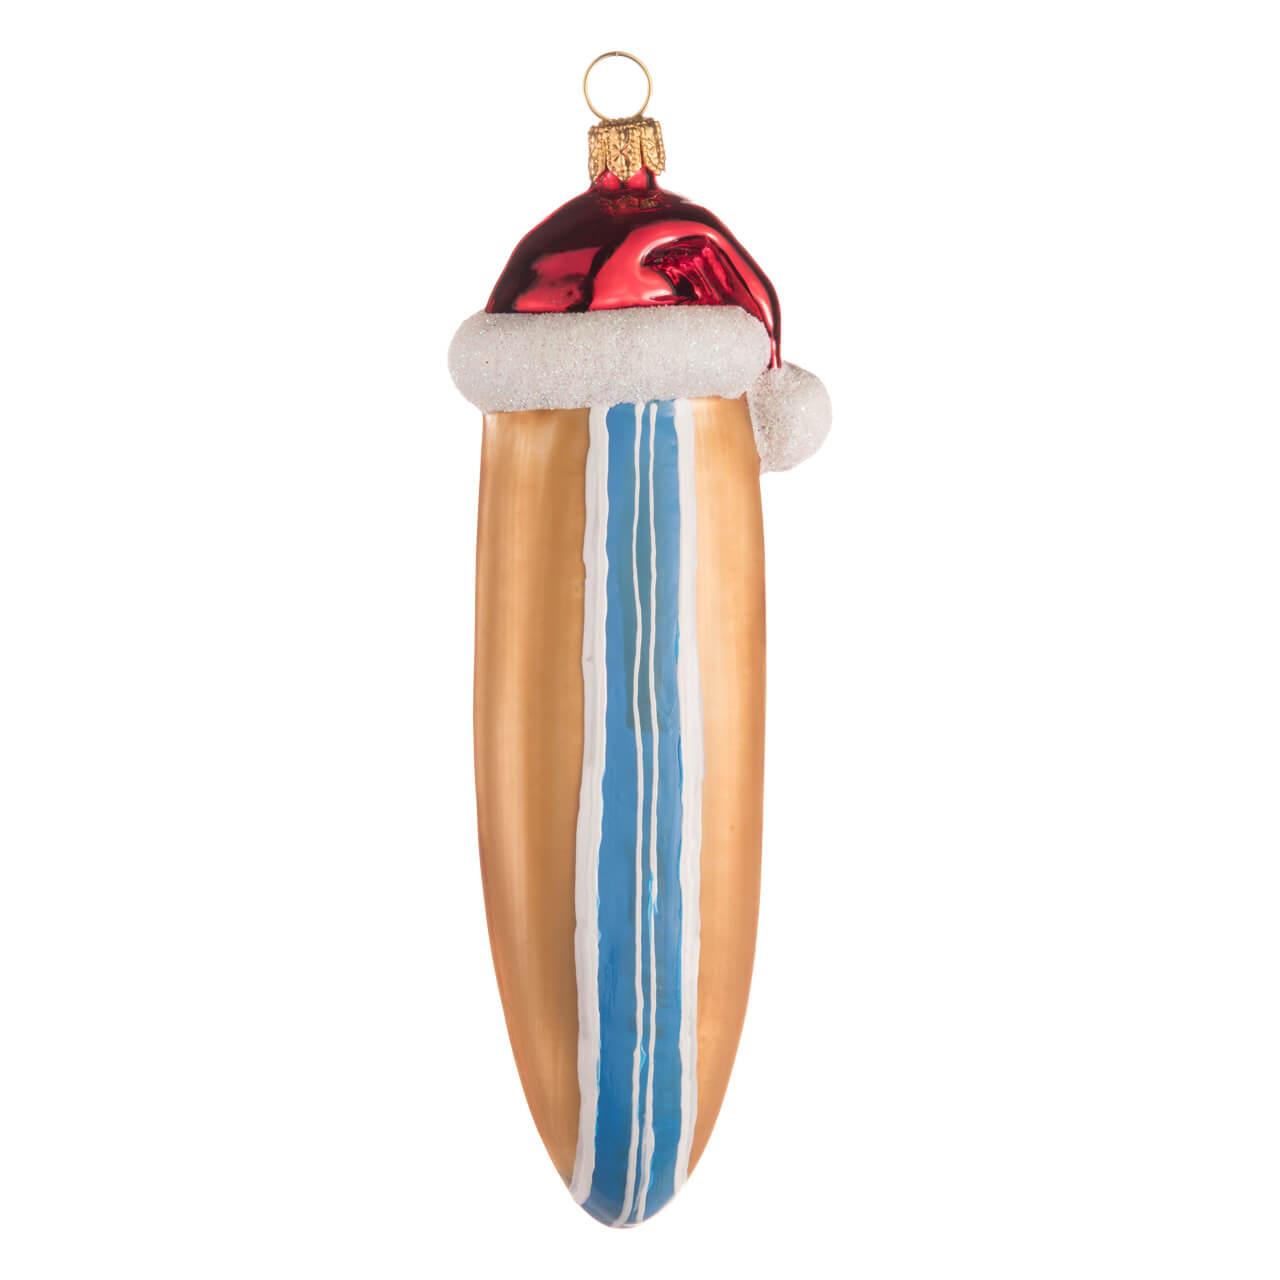 Santa's surfboard